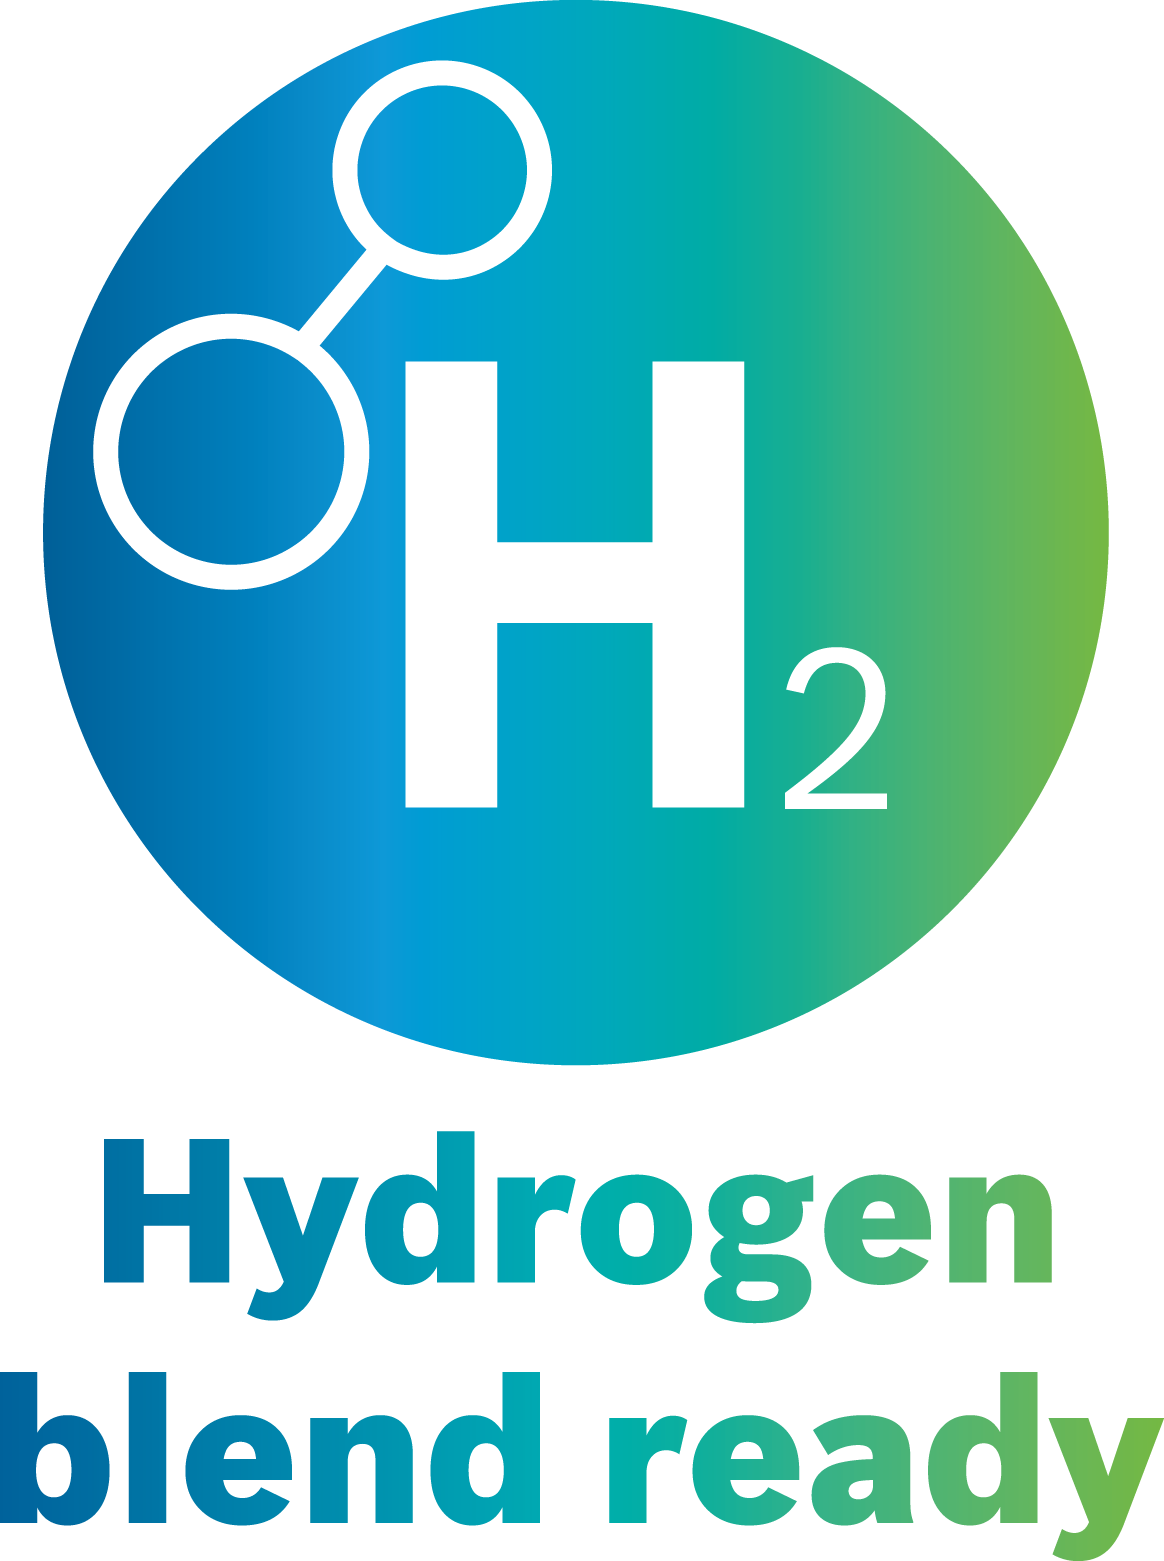 20% hydrogen blend 